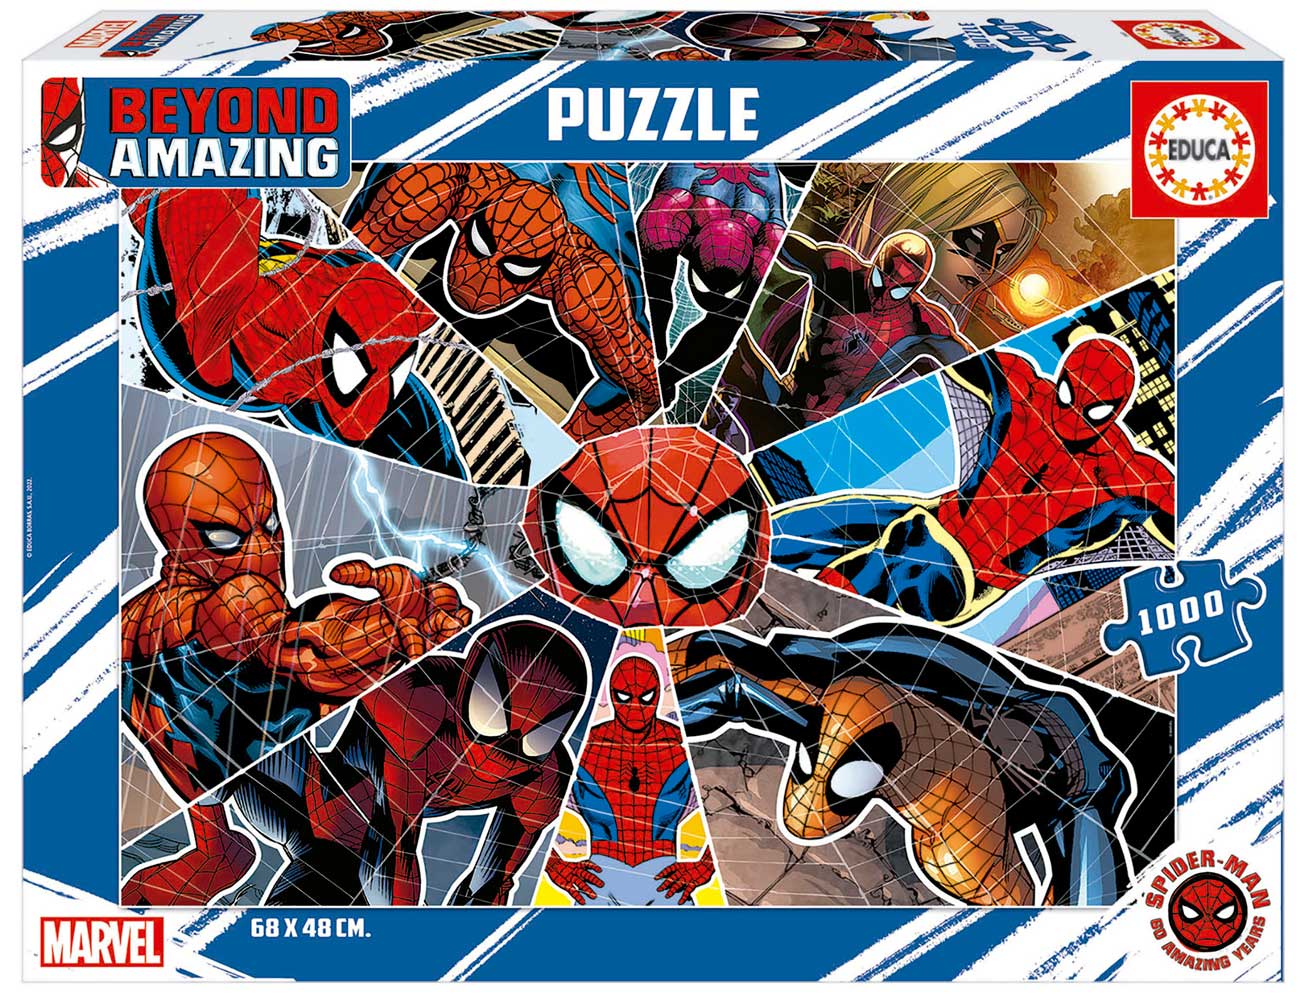 Puzzle Educa Spiderman Beyond Amazing de 1000 Piezas